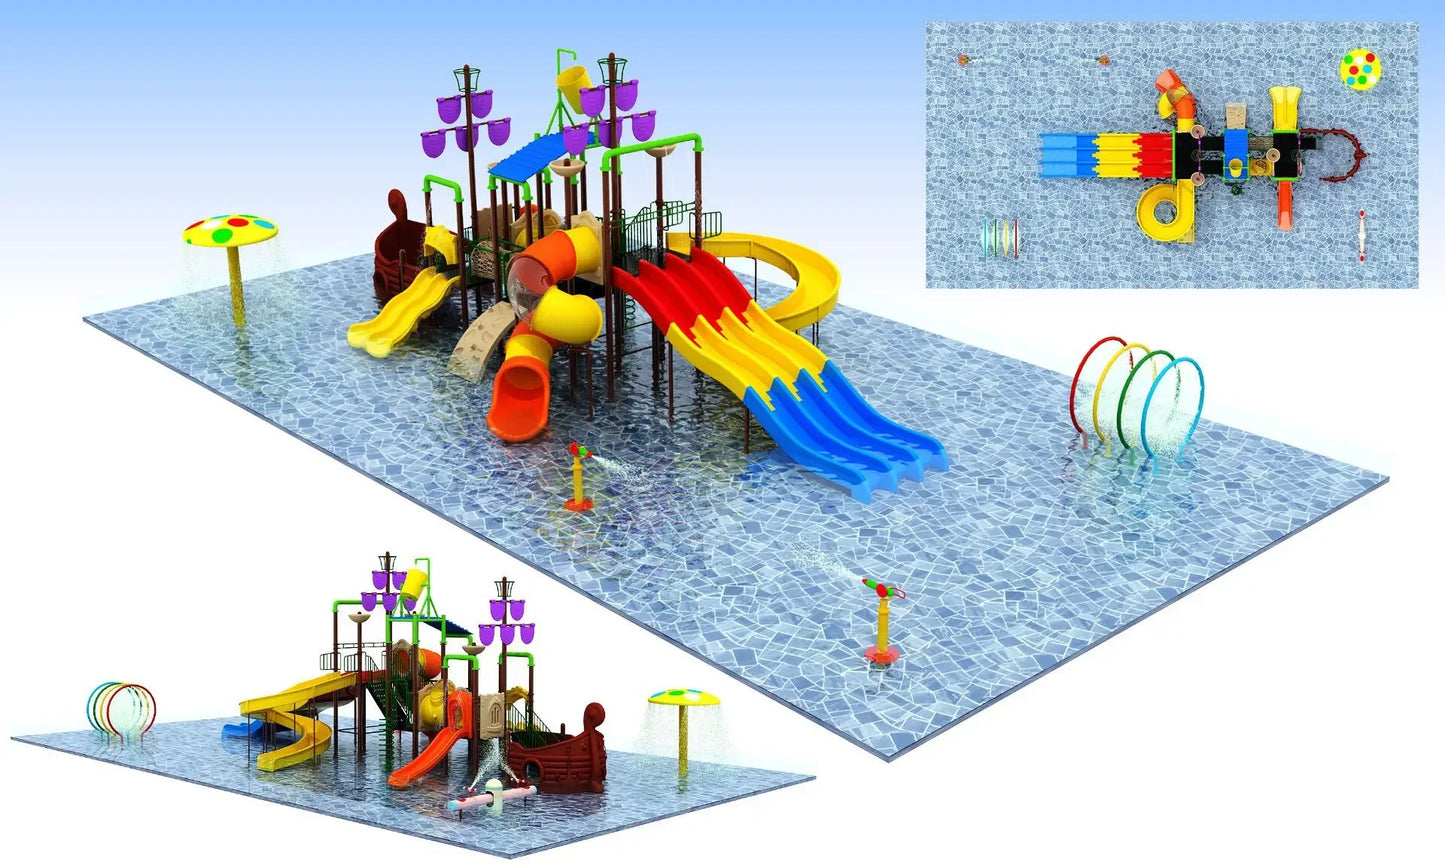 Watr park, swimming pool, wter spray play equipment, waer slide, outdoor combination slide, outdoor children's watr house